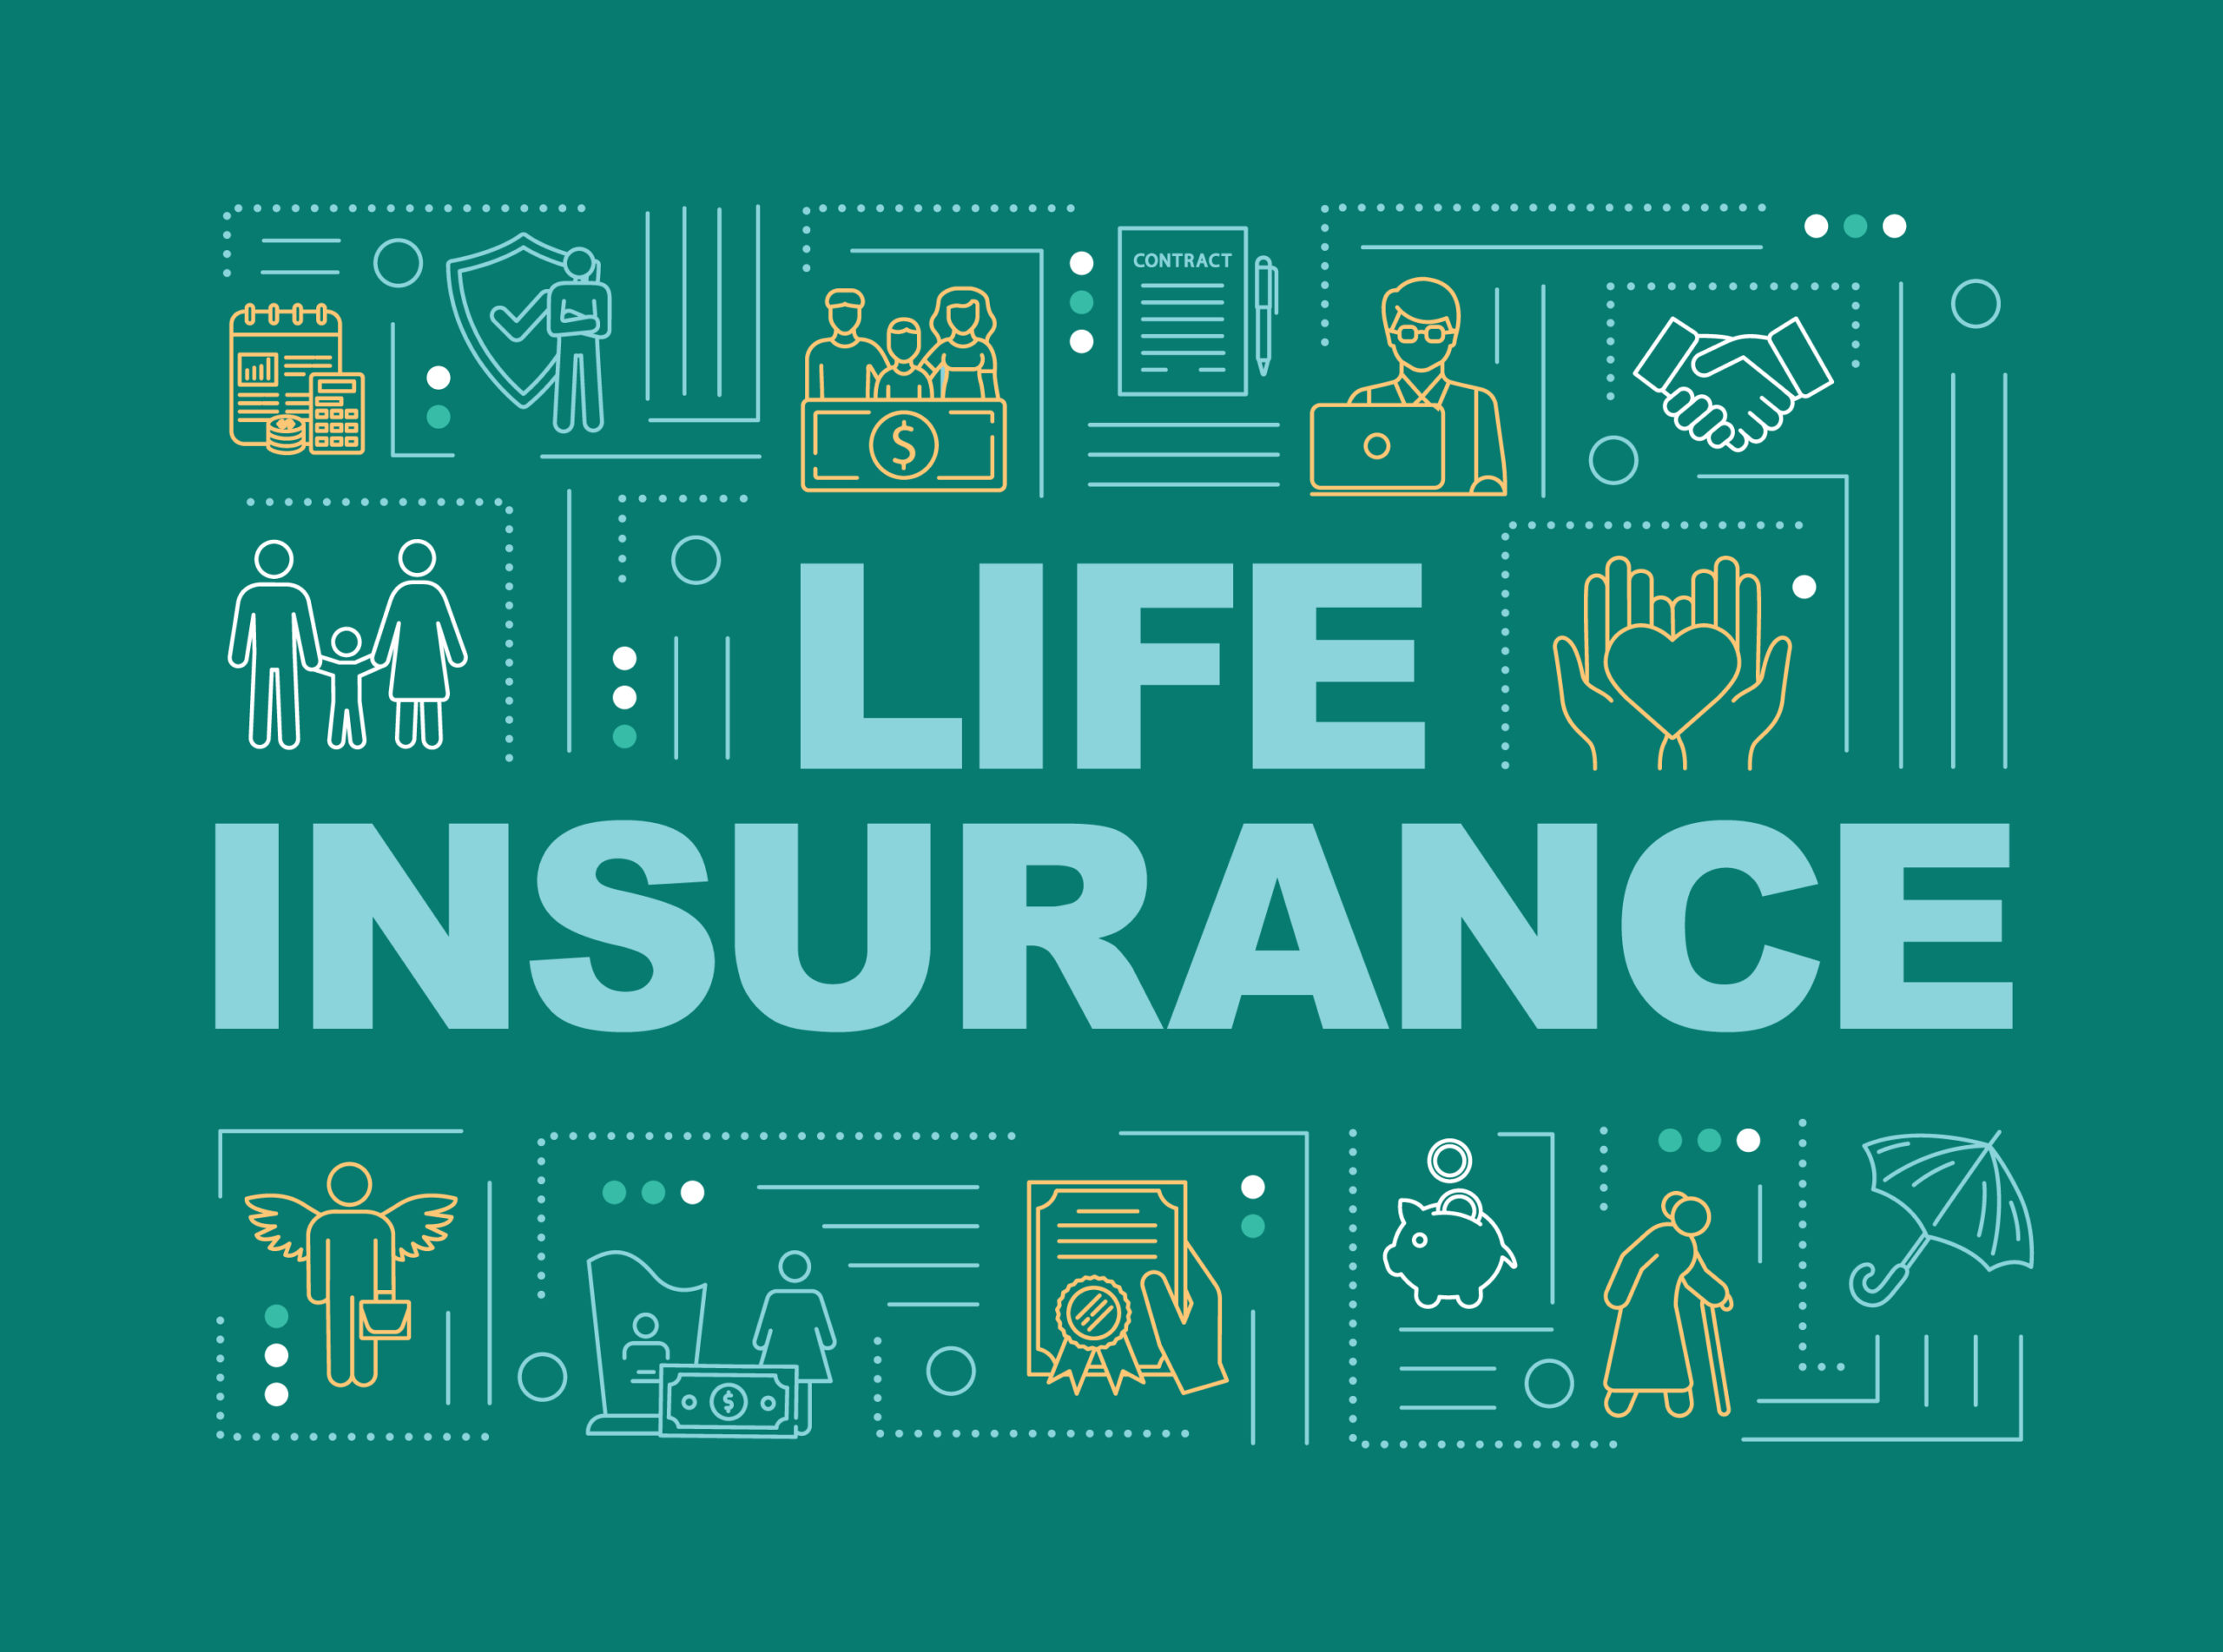 Universal life insurance